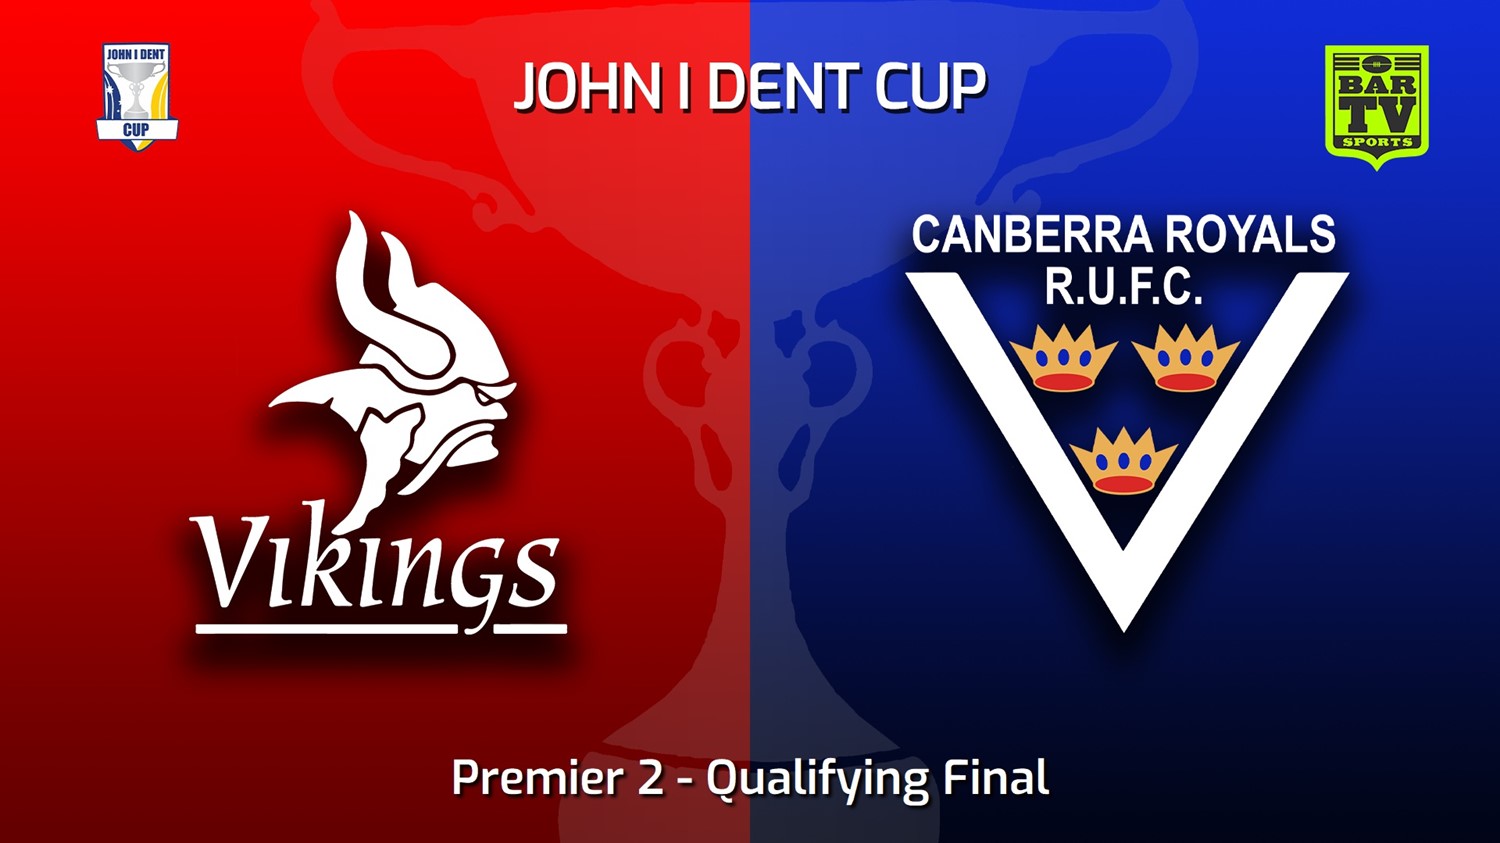 220827-John I Dent (ACT) Qualifying Final - Premier 2 - Tuggeranong Vikings v Canberra Royals Slate Image